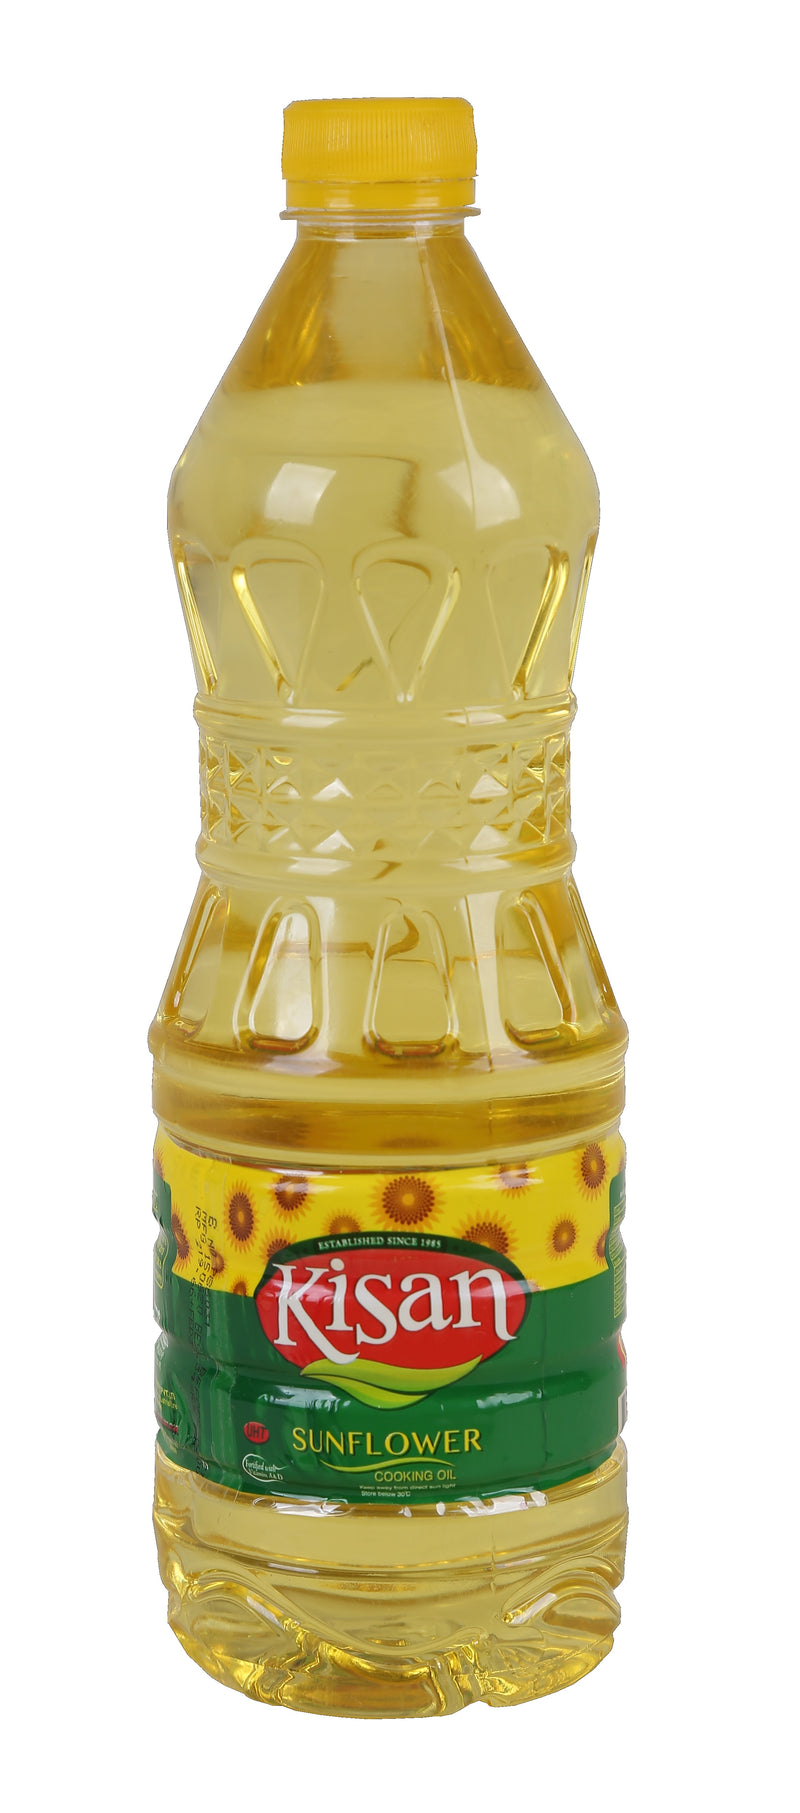 Kisan Sunflower Cooking Oil 1 Liter PET BTL